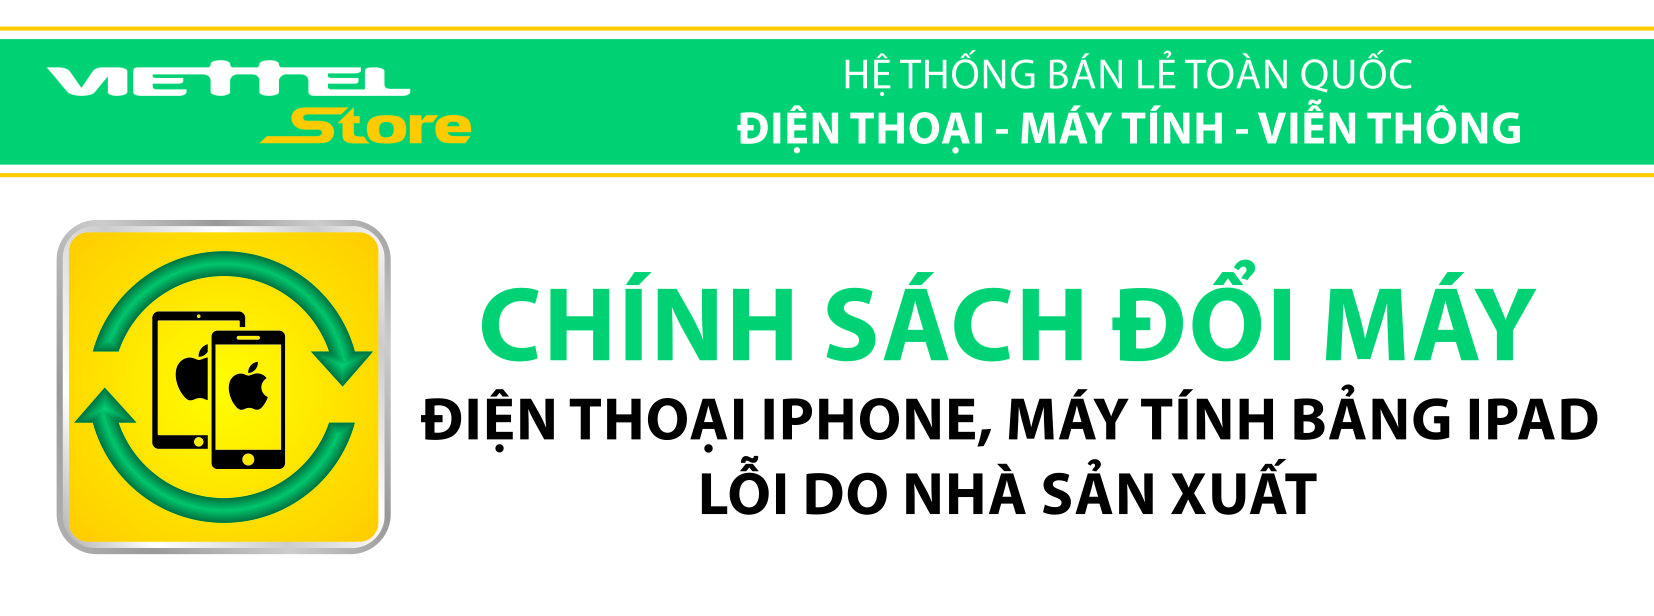 Chinh sach bao hanh IP.jpg